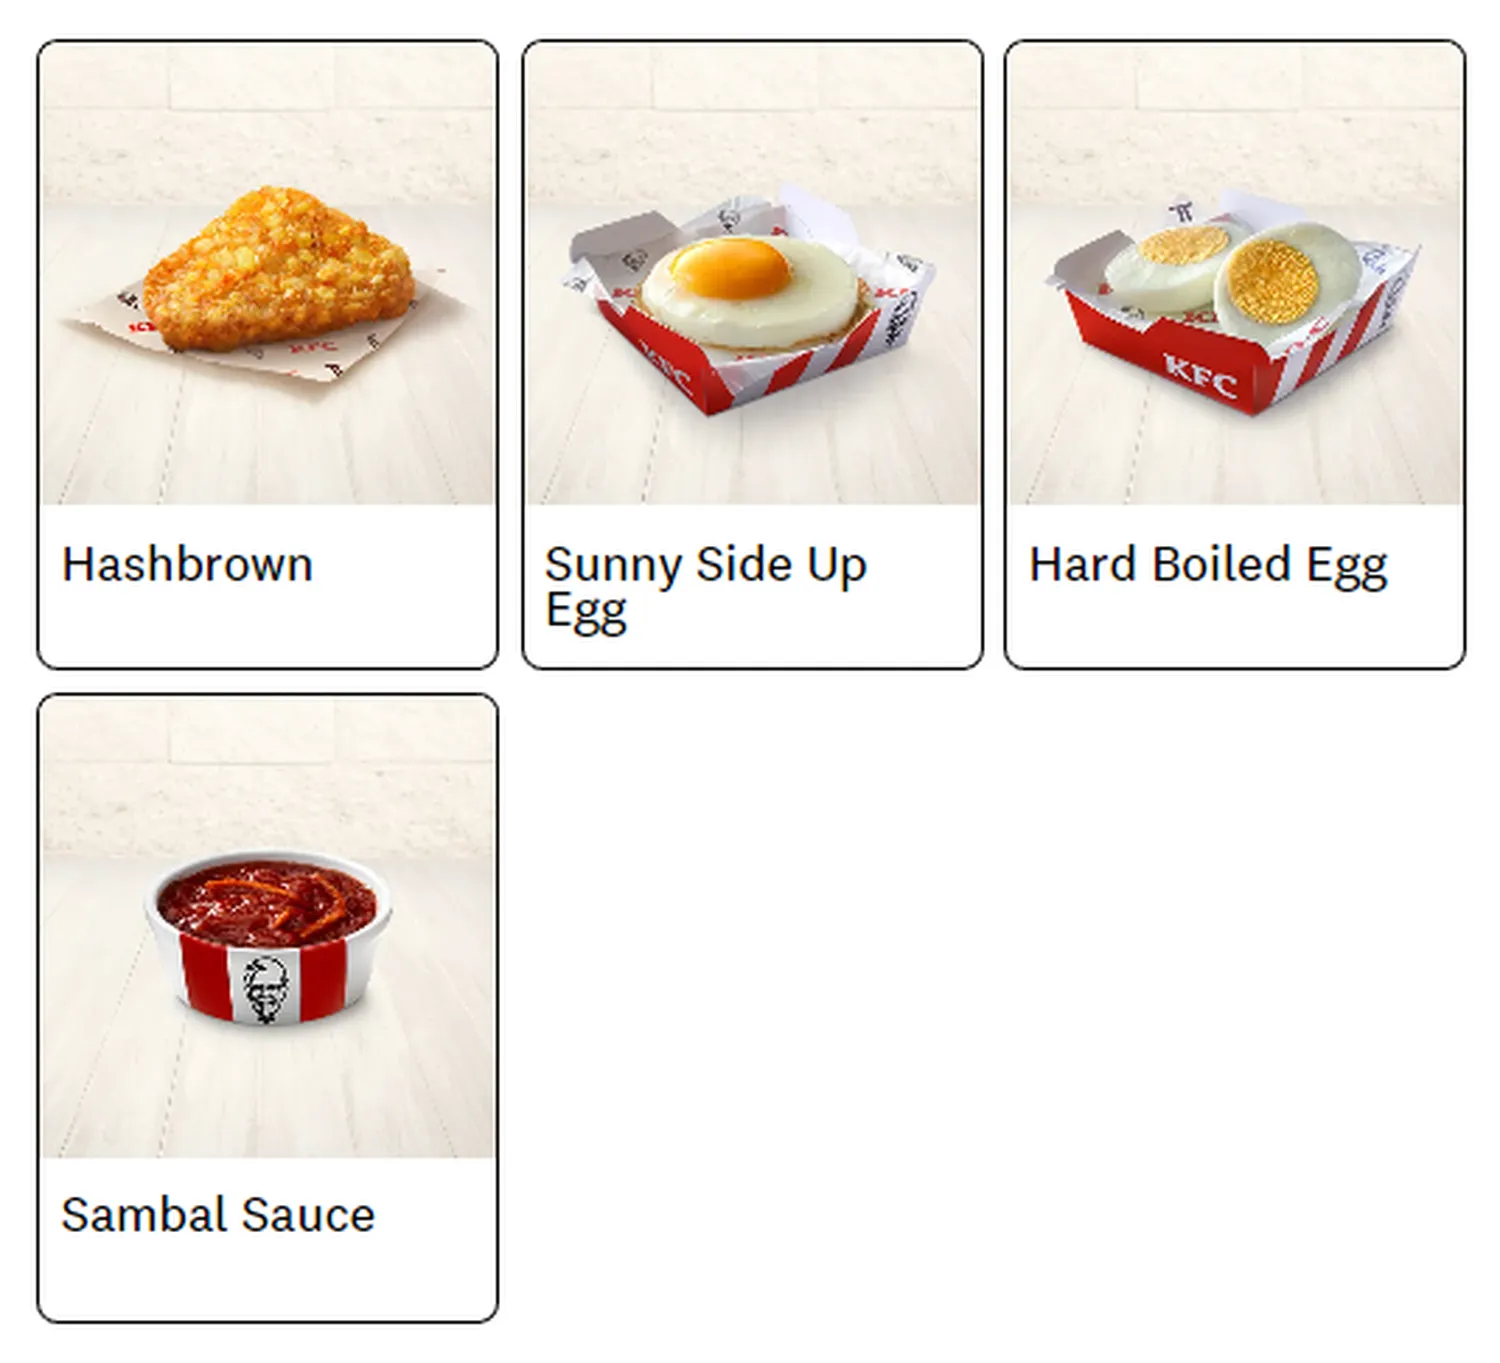 kfc breakfast menu malaysia add on sides